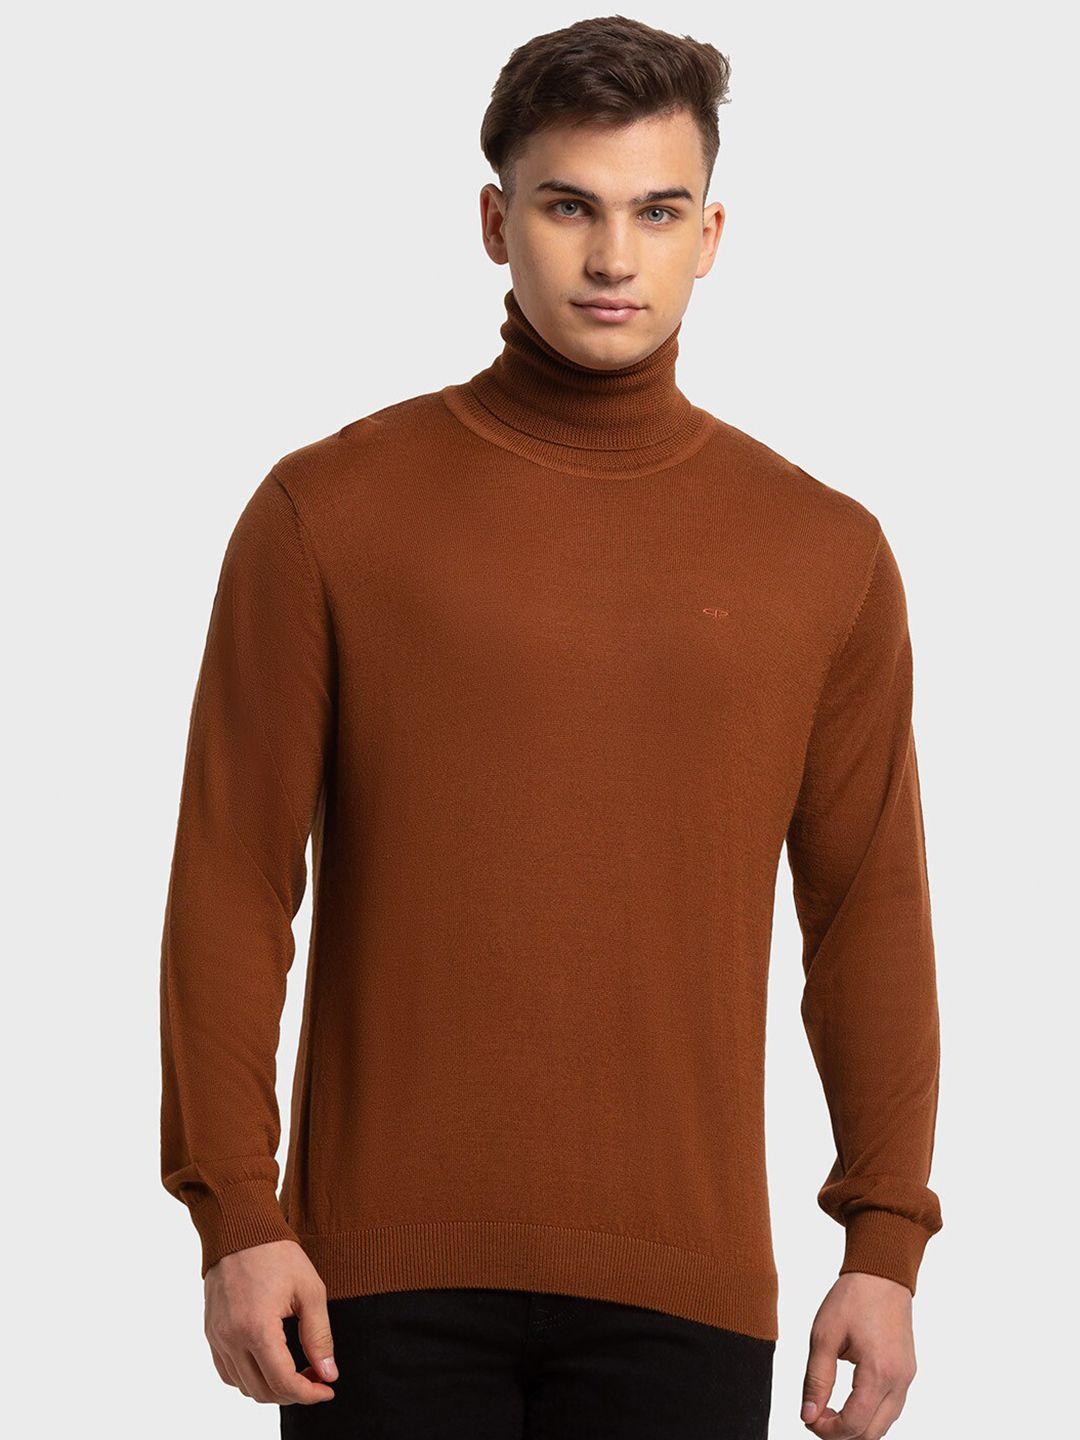 colorplus-men-turtle-neck-pullover-sweater